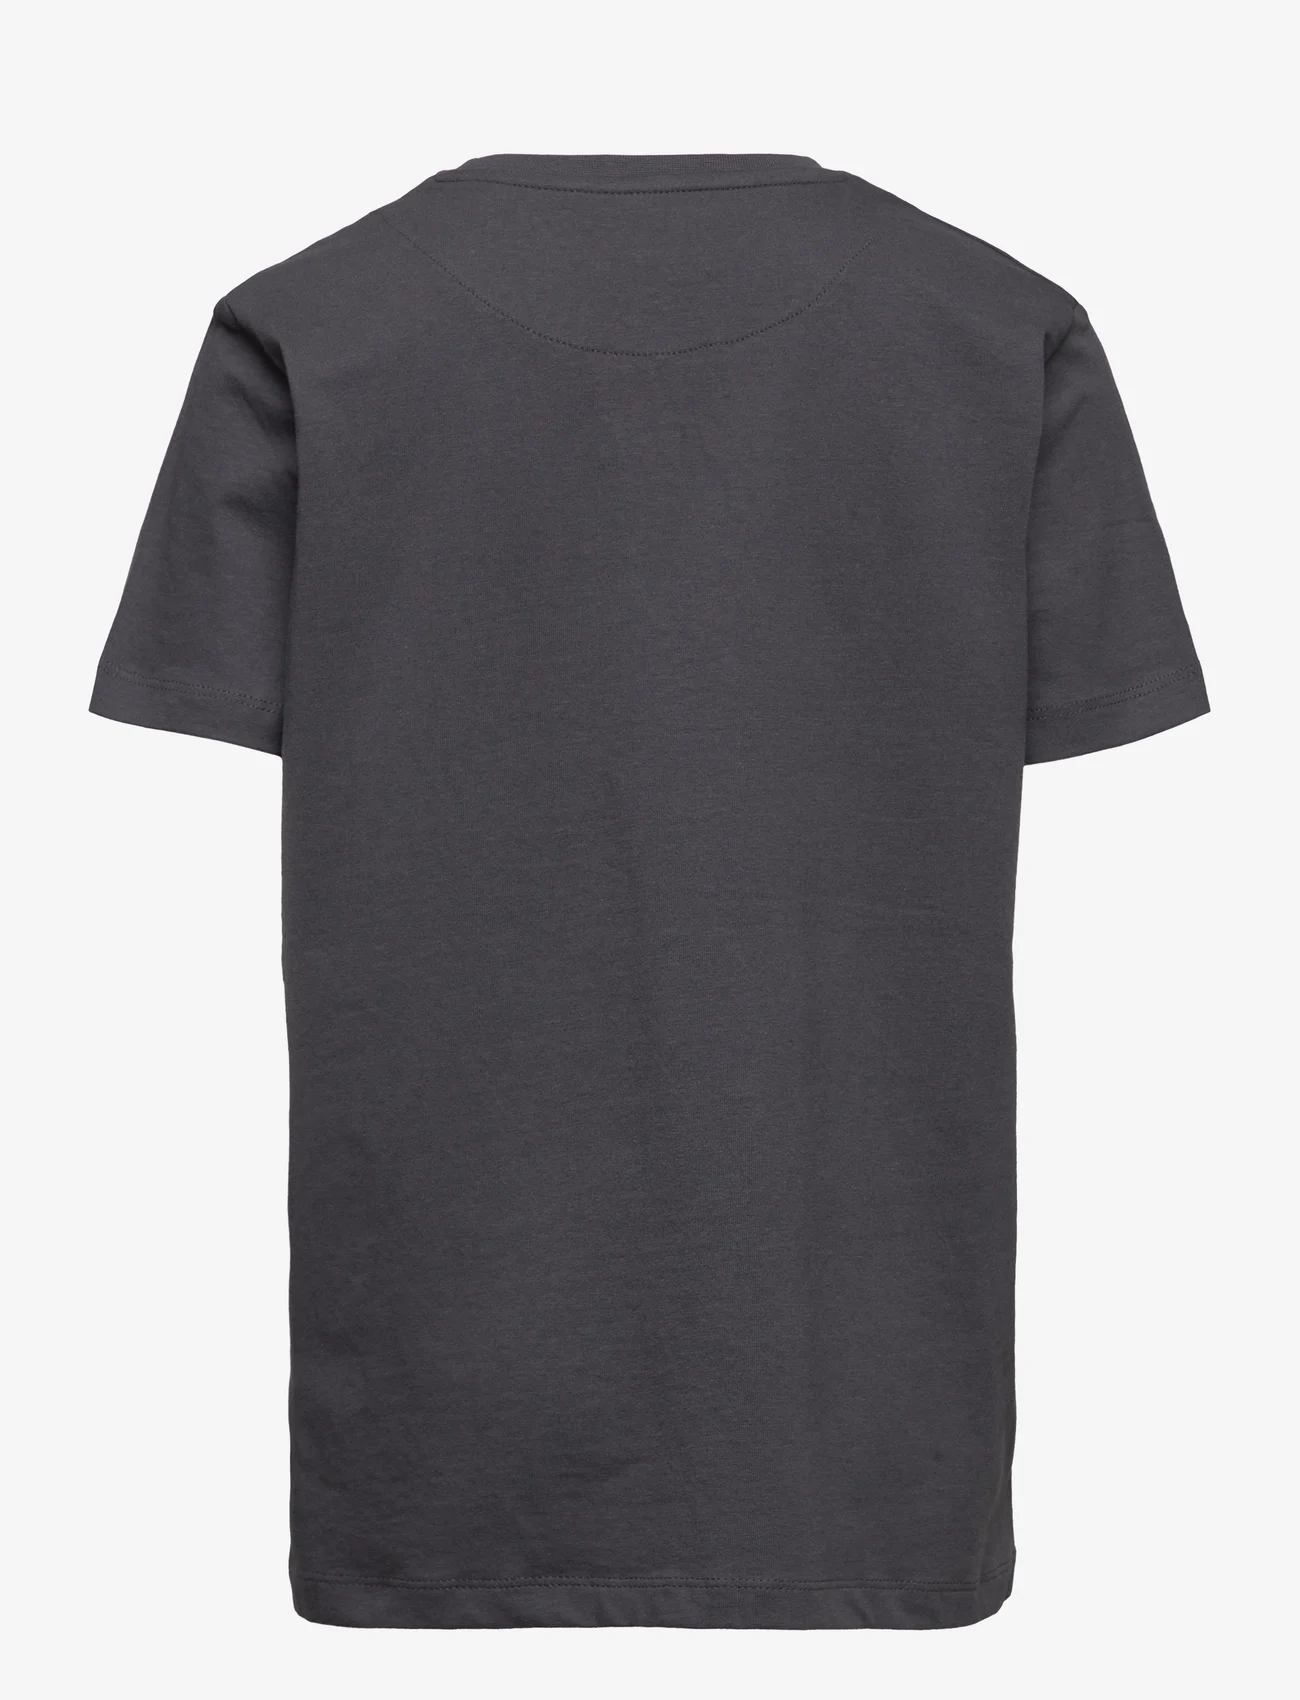 Lyle & Scott Junior - Classic T-Shirt - kurzärmelige - ebony - 1